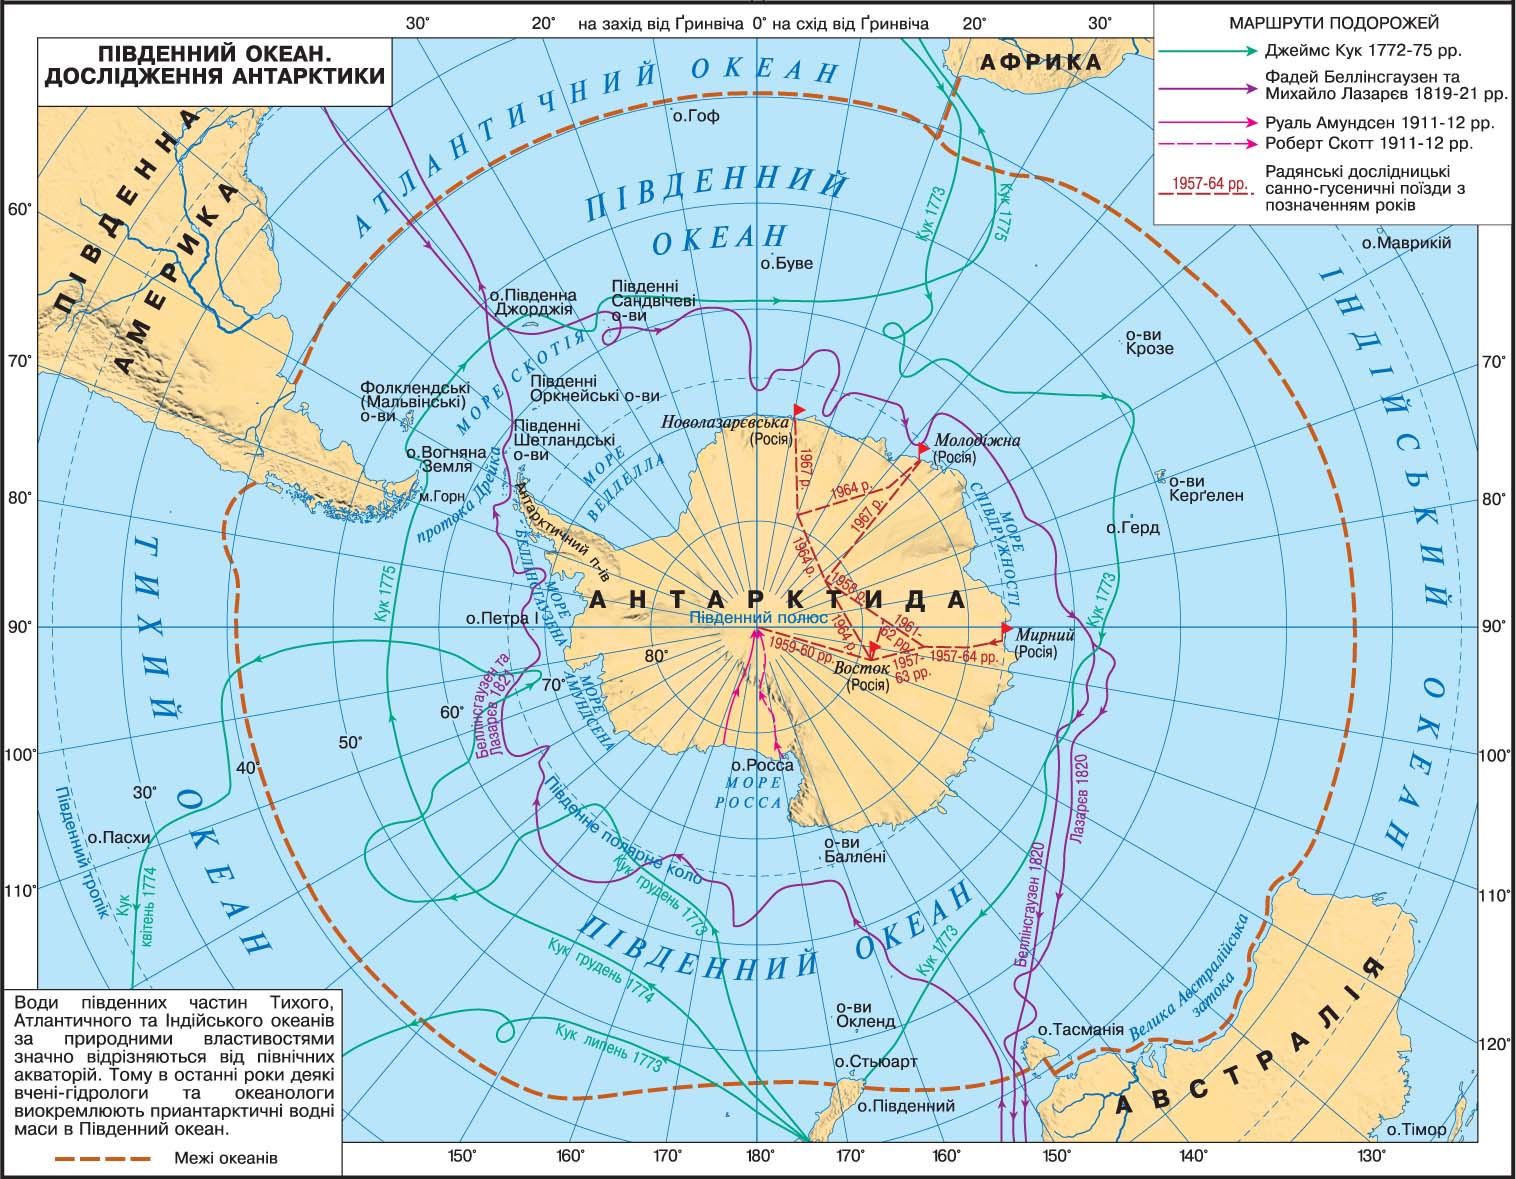 Местоположение антарктиды. Показать на карте Северный Ледовитый океан и Антарктиду. Море Беллинсгаузена — ; море Амундсена —. Границы Южного океана на карте.